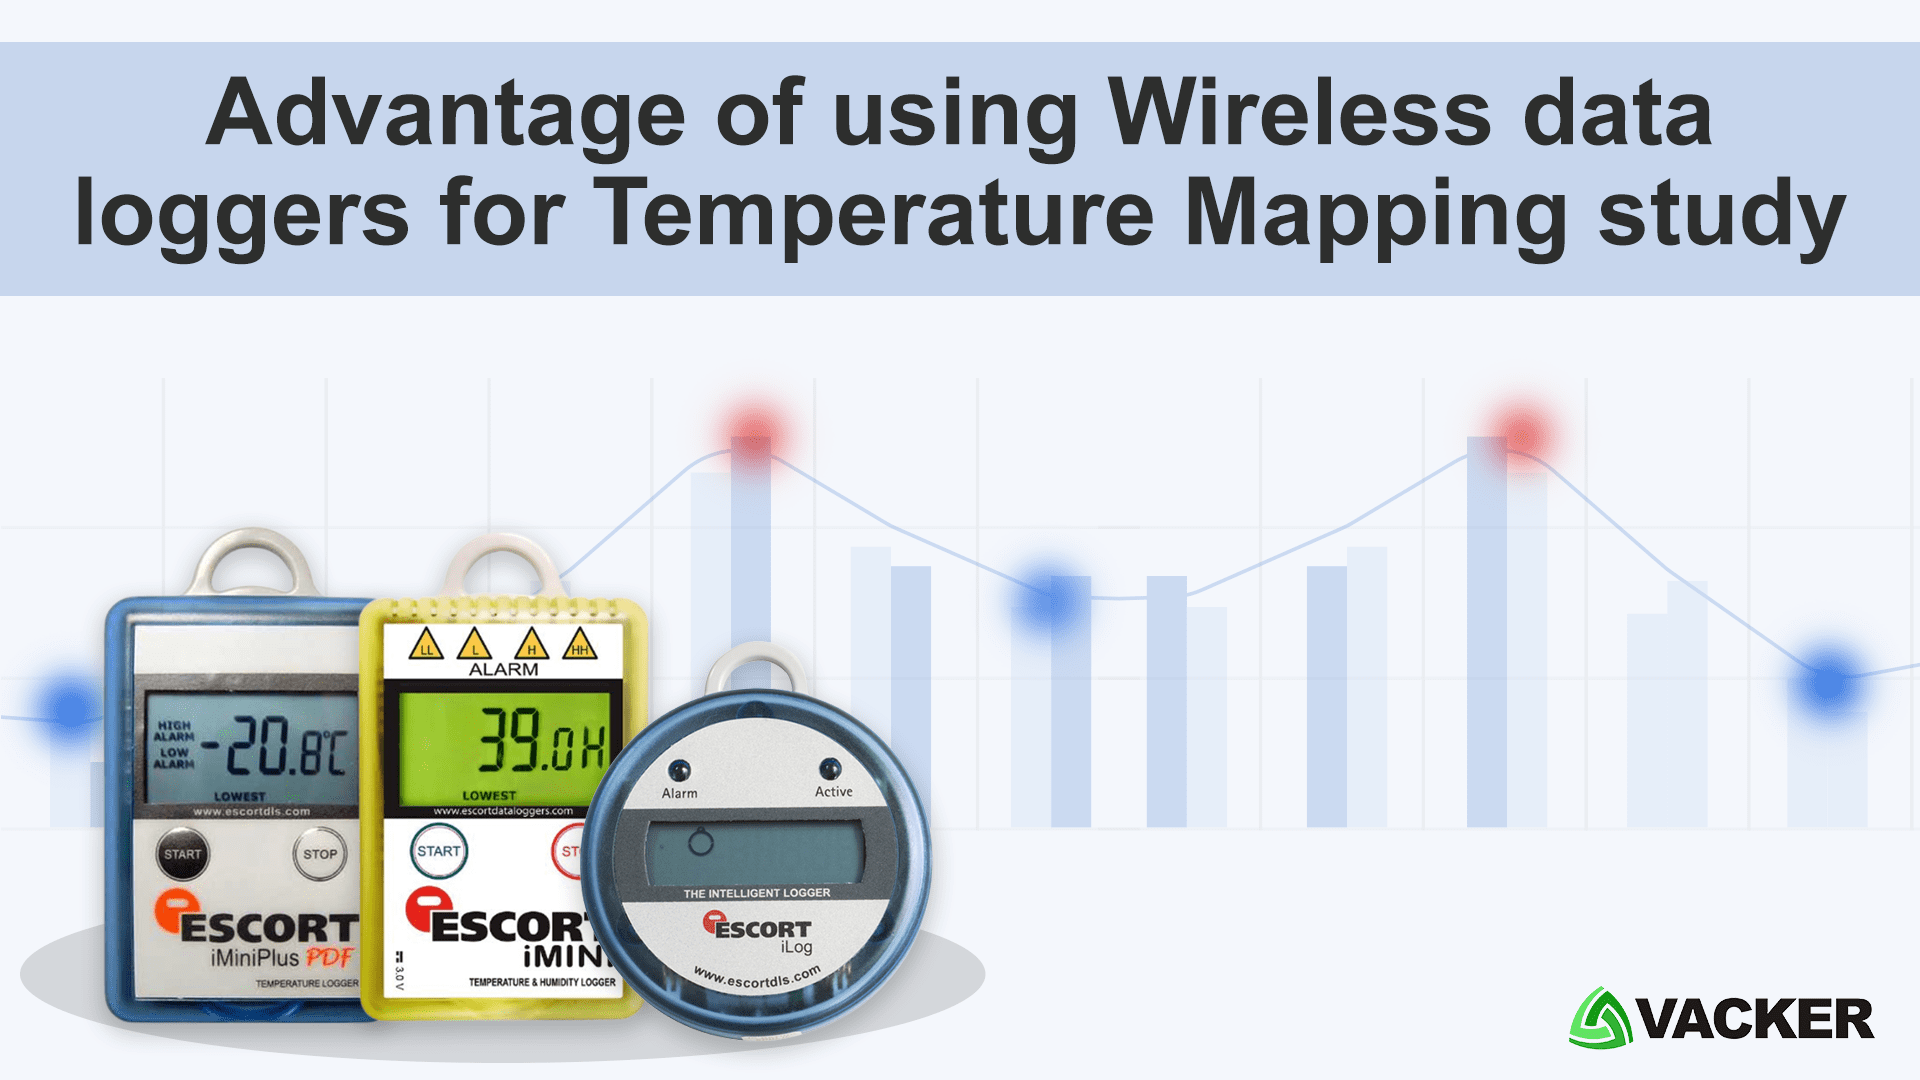 https://www.temperaturemonitoringuae.com/wp-content/uploads/2016/12/Advantage-of-using-Wireless-data-loggers.png